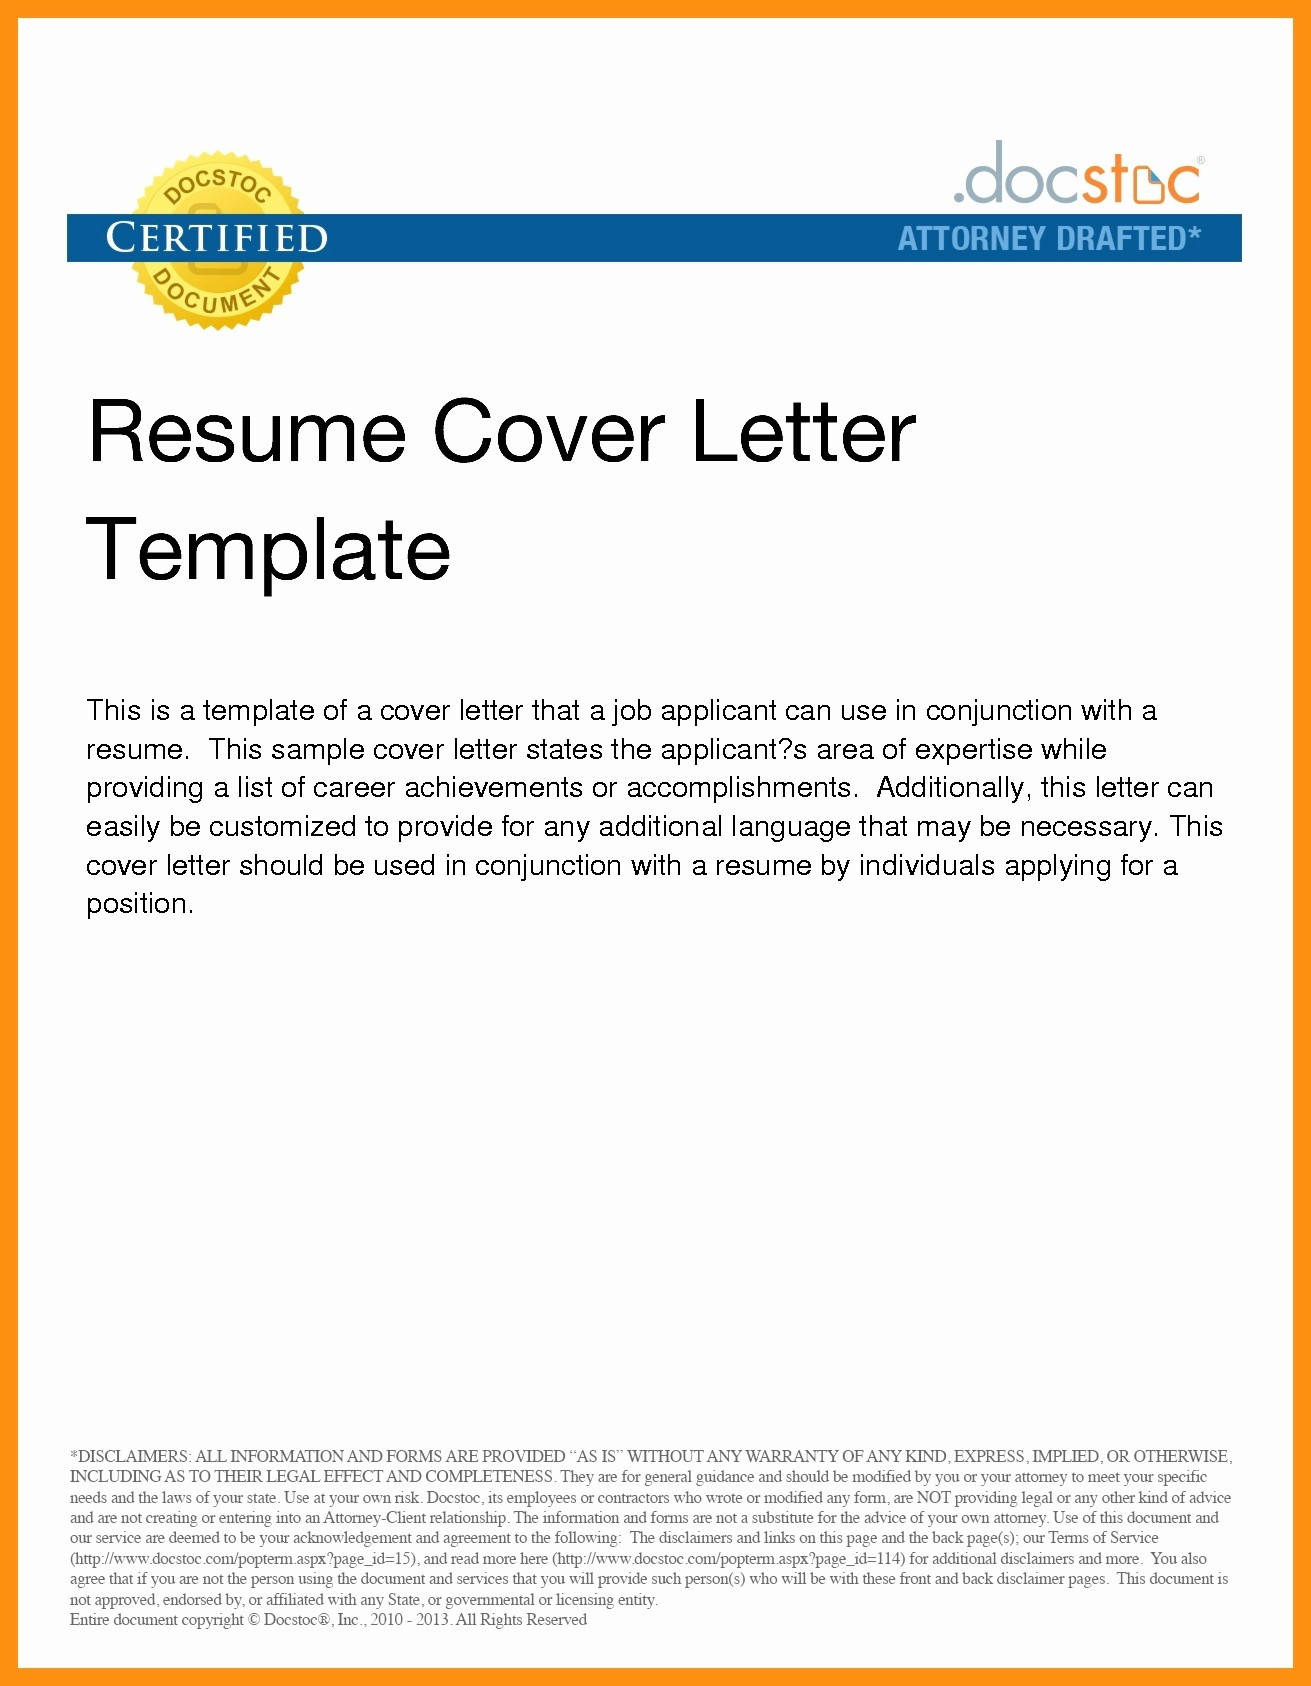 Sample Covering Letter for Sending Resume Through Email Sending Resume and Cover Letter by Email Collection